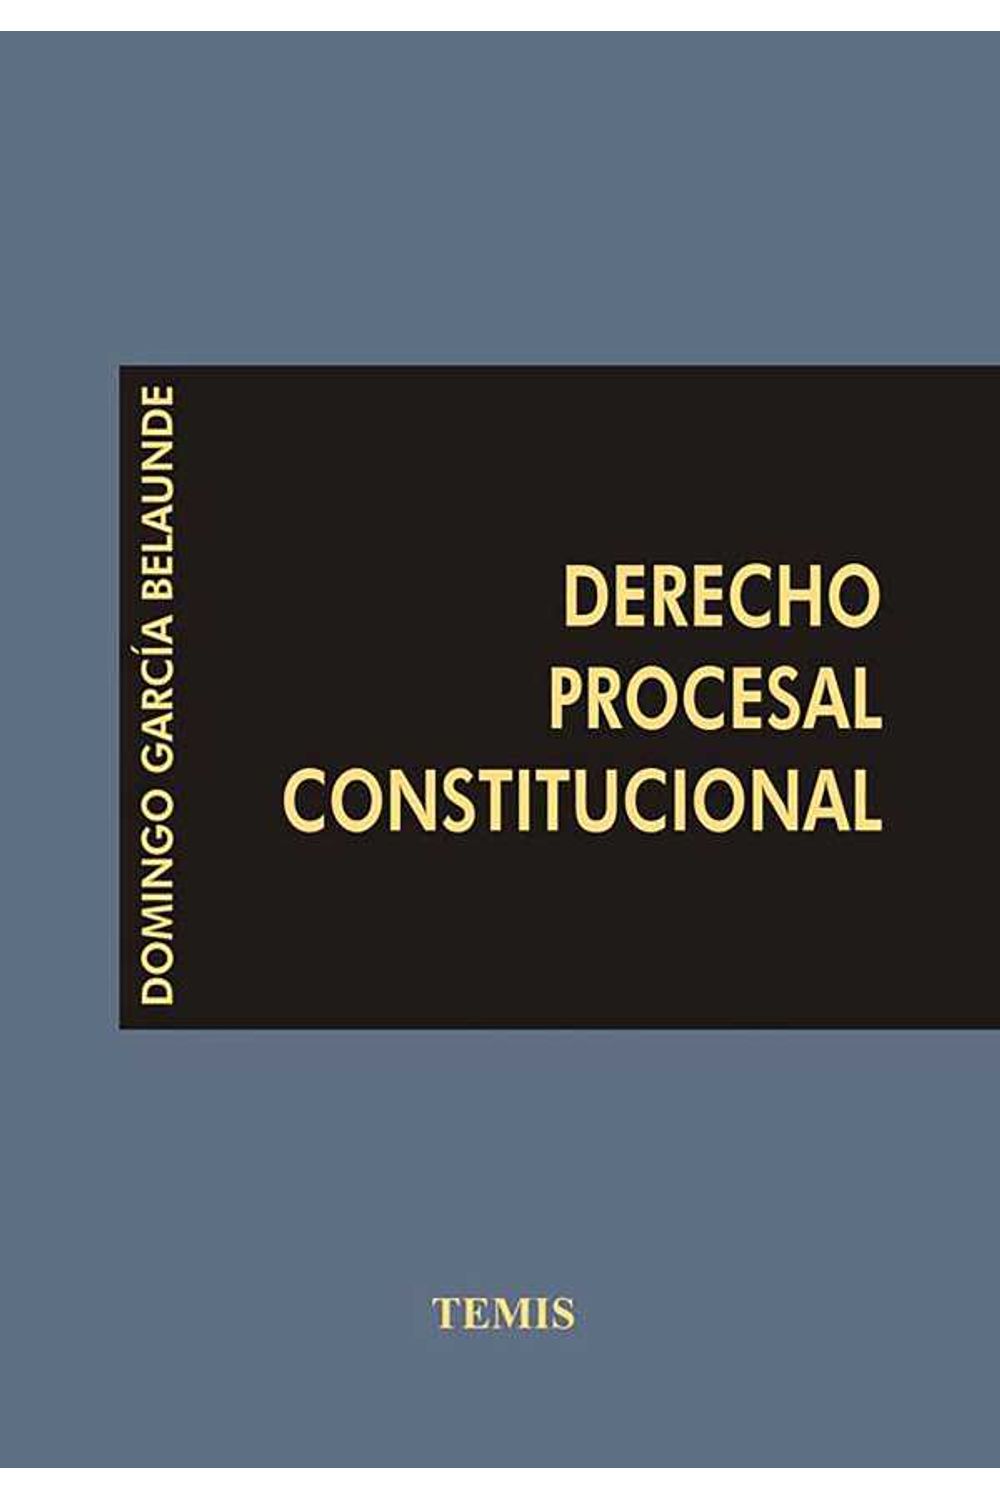 bw-derecho-procesal-constitucional-temis-9789583516795